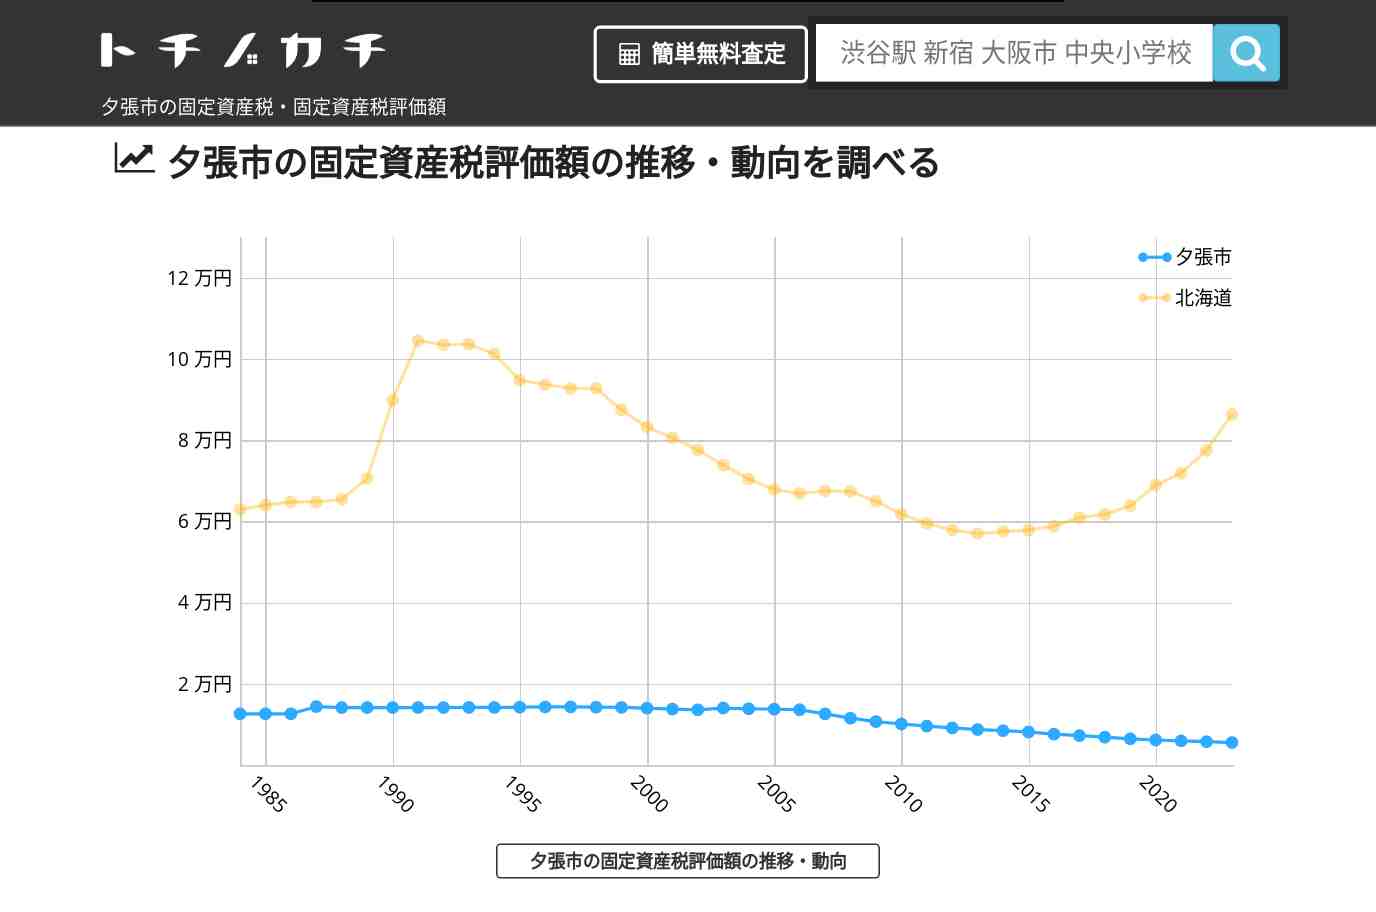 夕張市(北海道)の固定資産税・固定資産税評価額 | トチノカチ